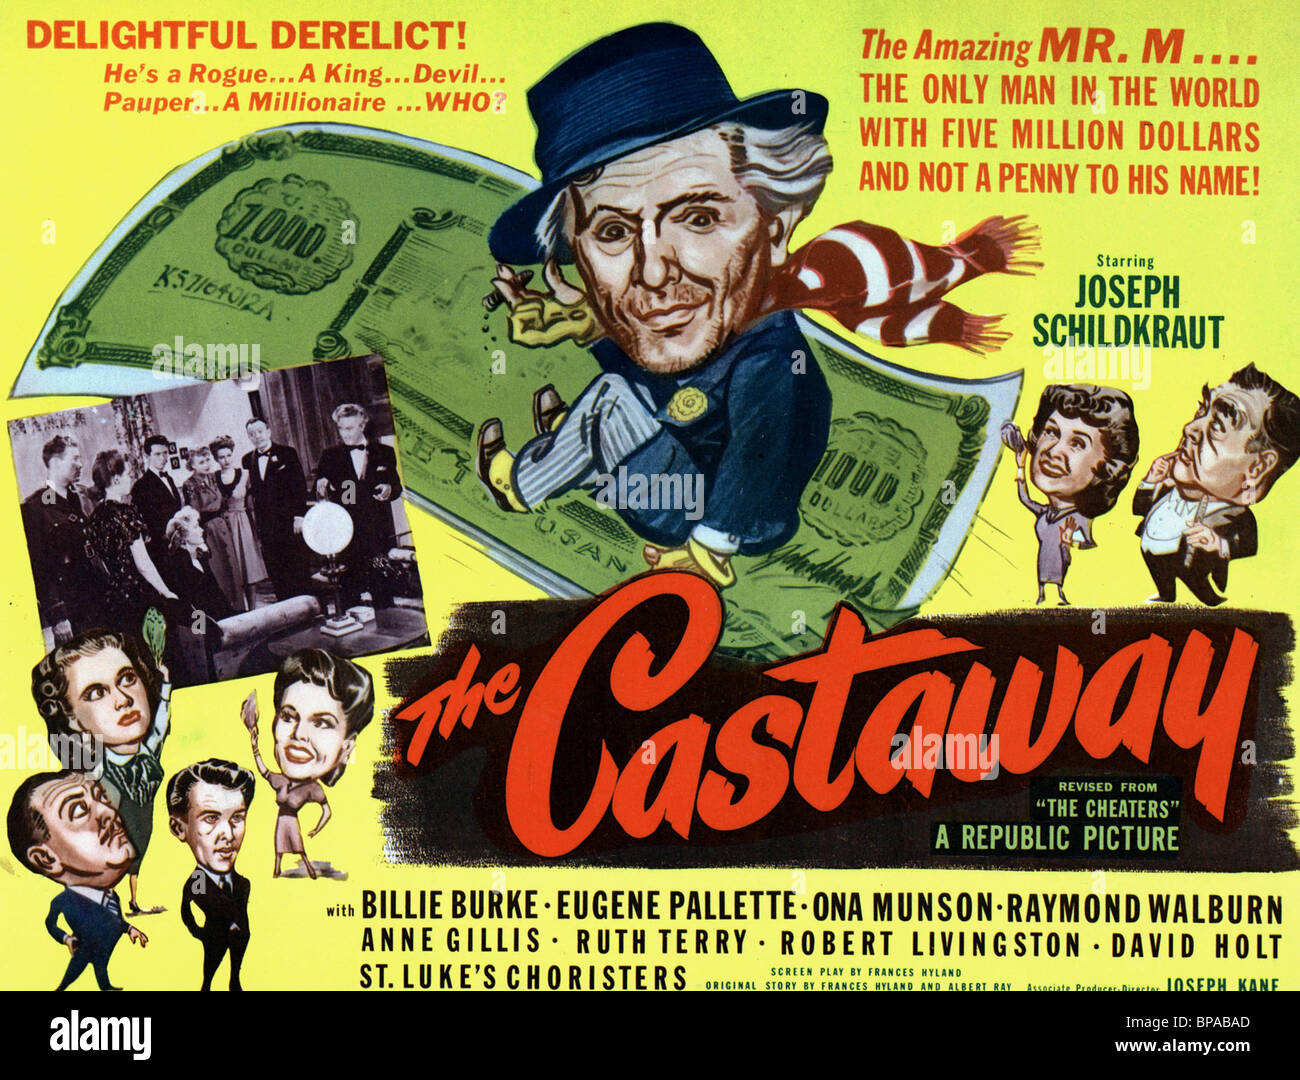 L'AFFICHE DE FILM CASTAWAY CASTAWAY L (1945) Banque D'Images